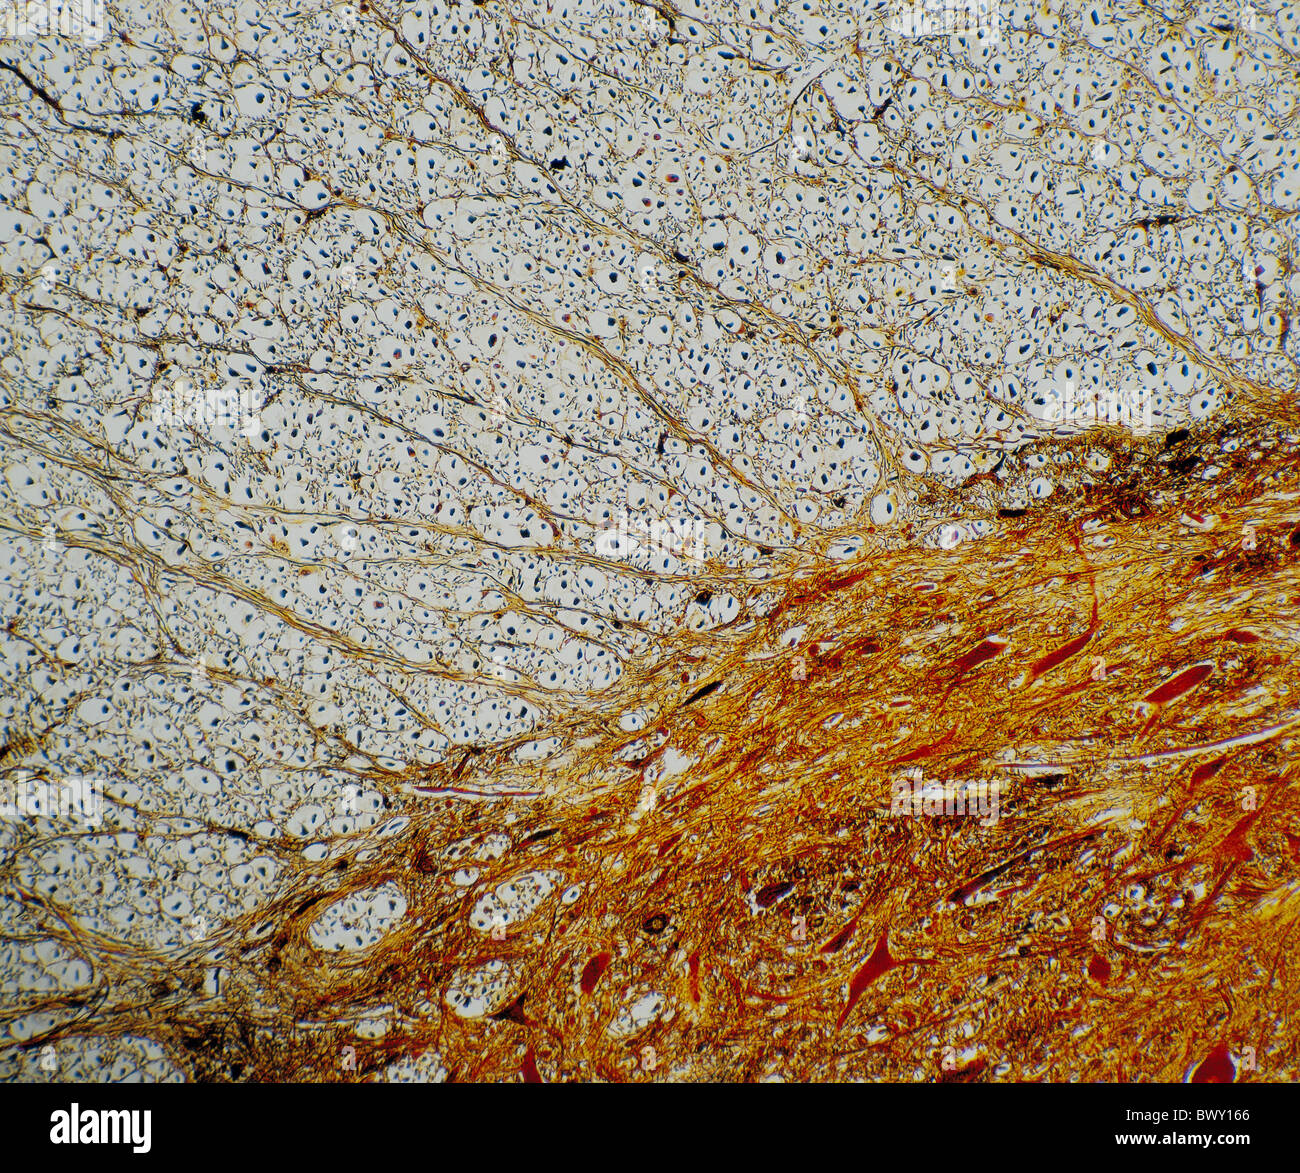 medicine microscope microscopy 40 1 spinal cord nerve cells colored medulla spinalis Stock Photo